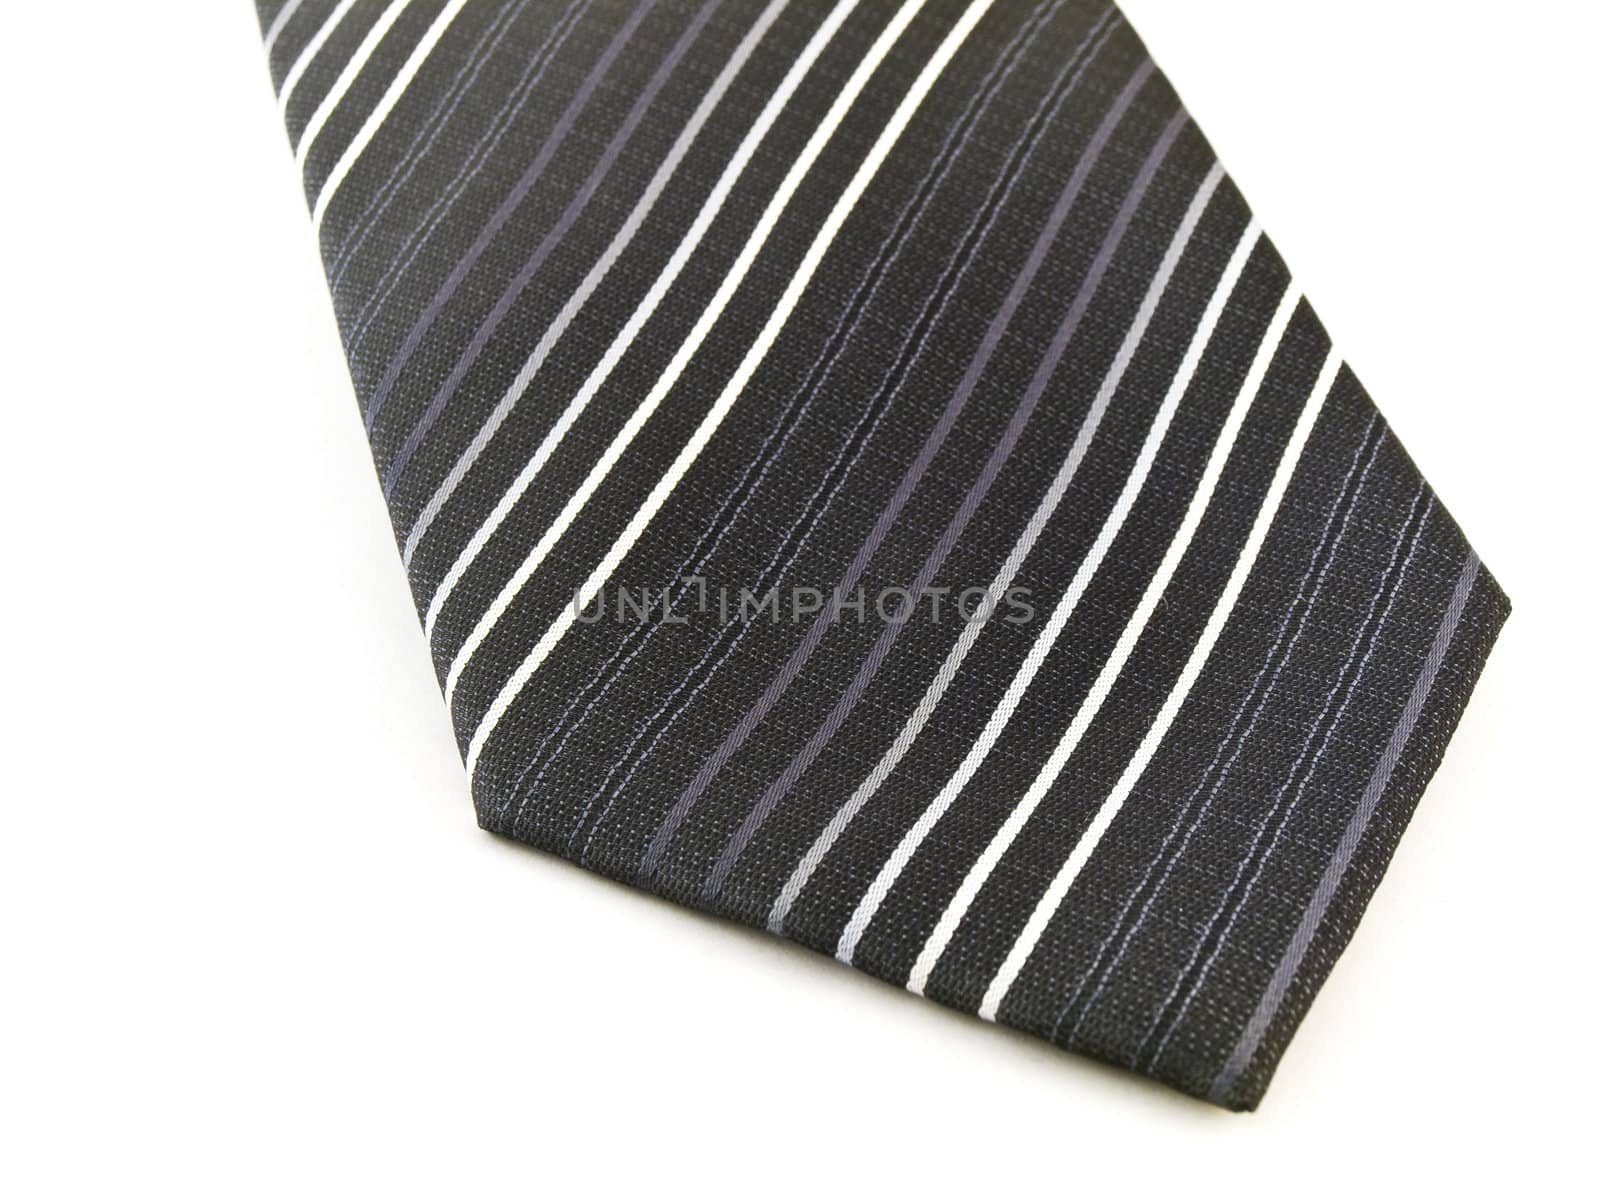 Black Tie on White Background by bobbigmac